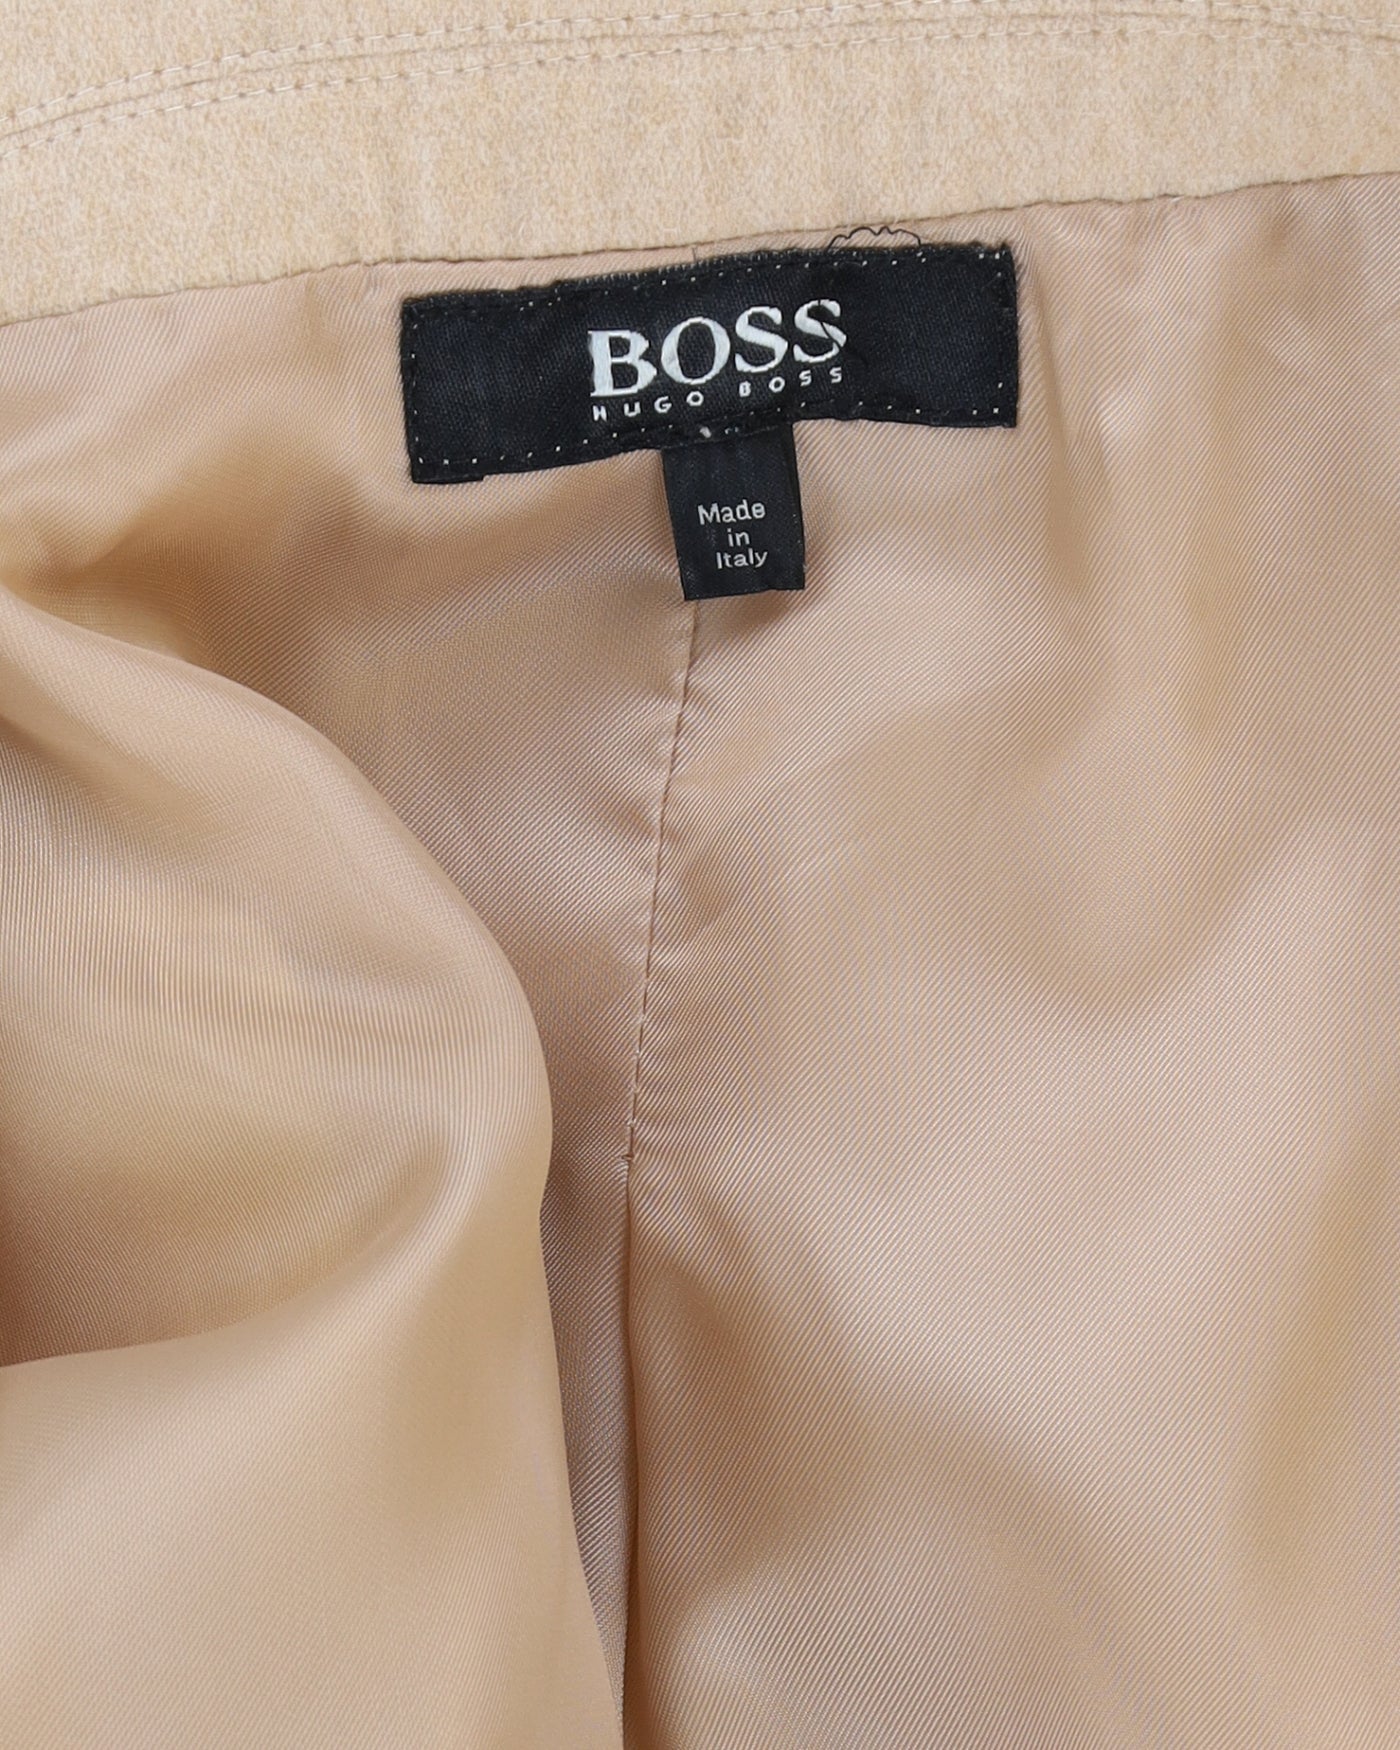 Hugo Boss Beige Wool 2 Piece Suit - S / M